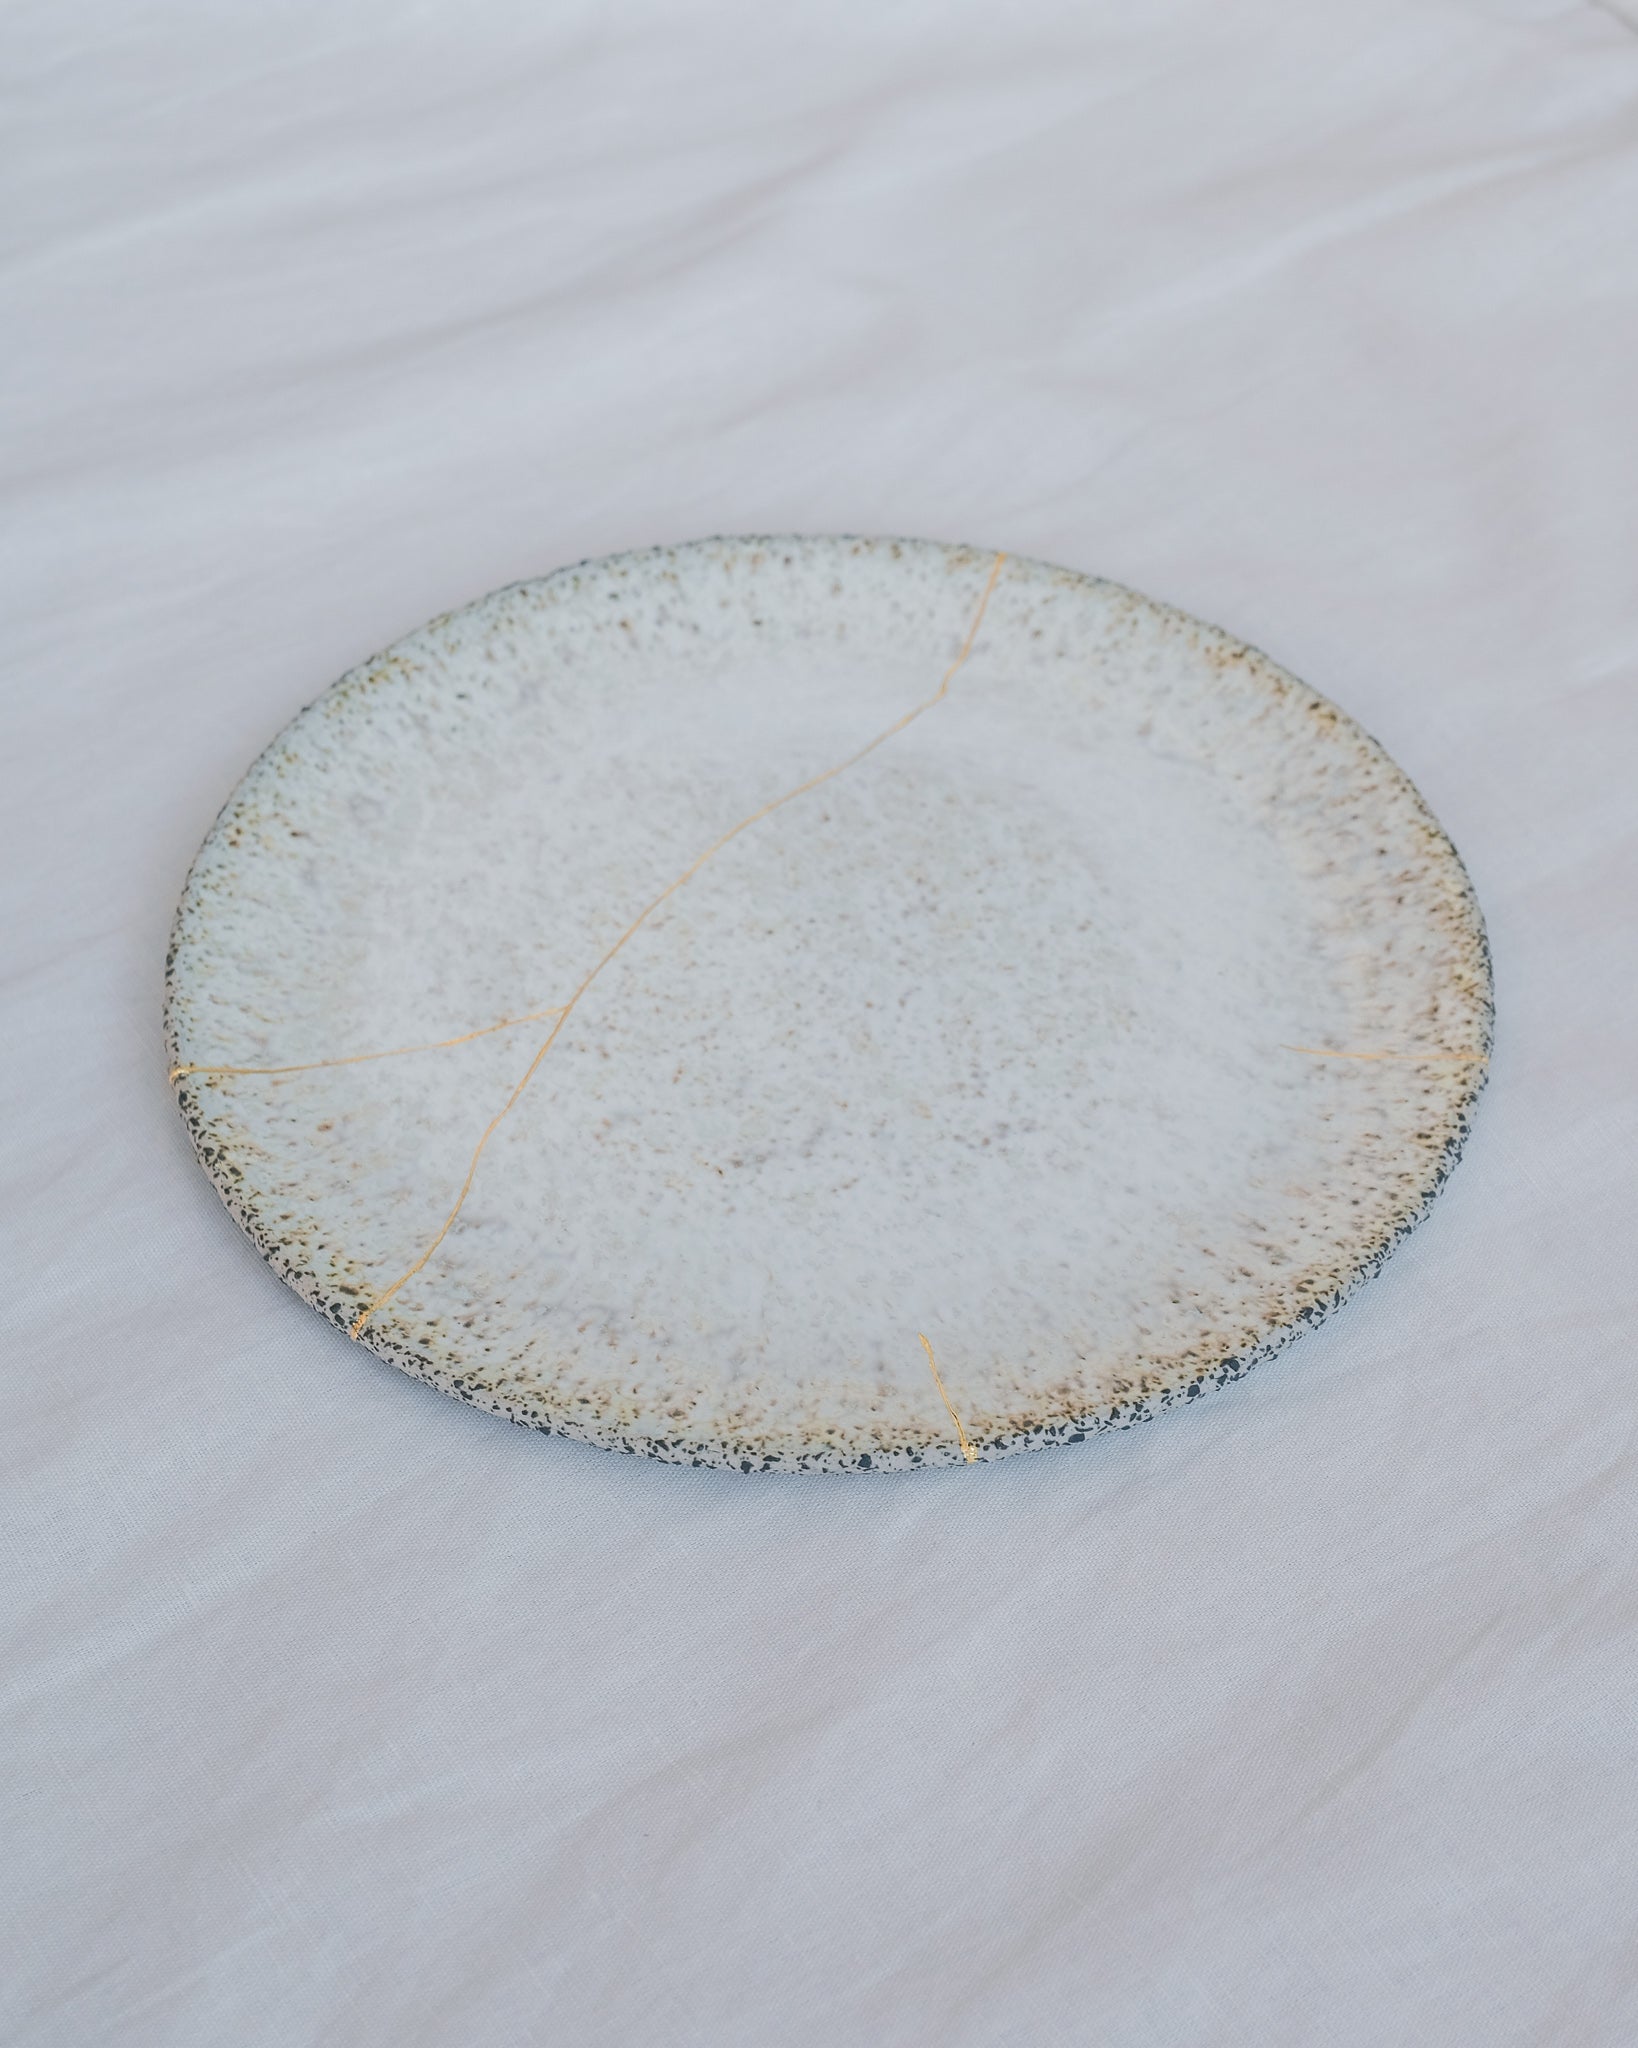 Cadaqués - Large plate 2